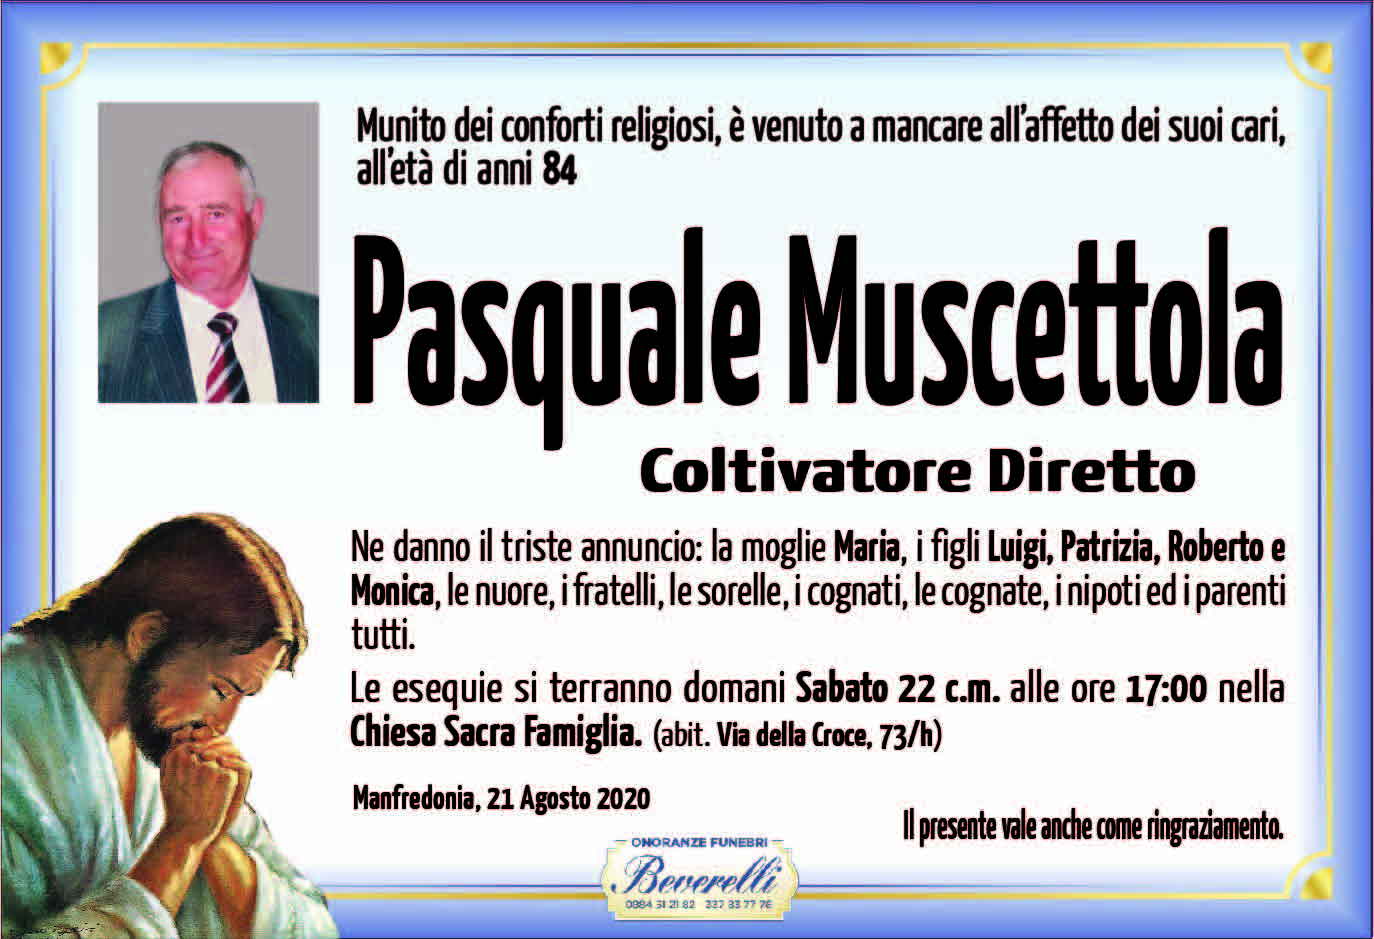 Pasquale Muscettola